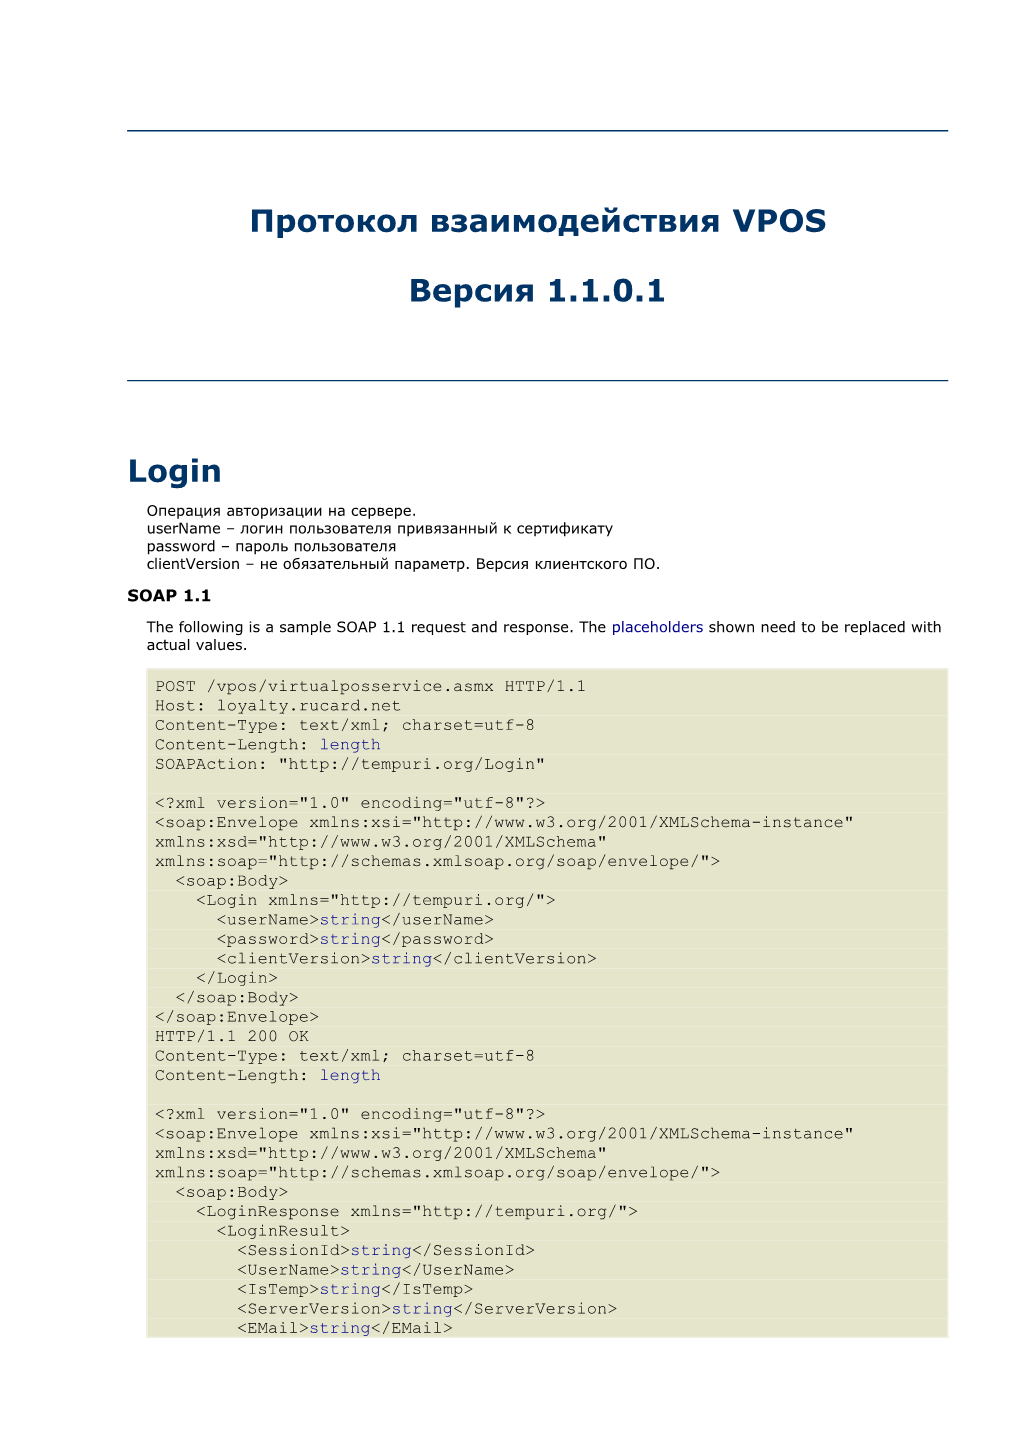 POST /Vpos/Virtualposservice.Asmx HTTP/1.1